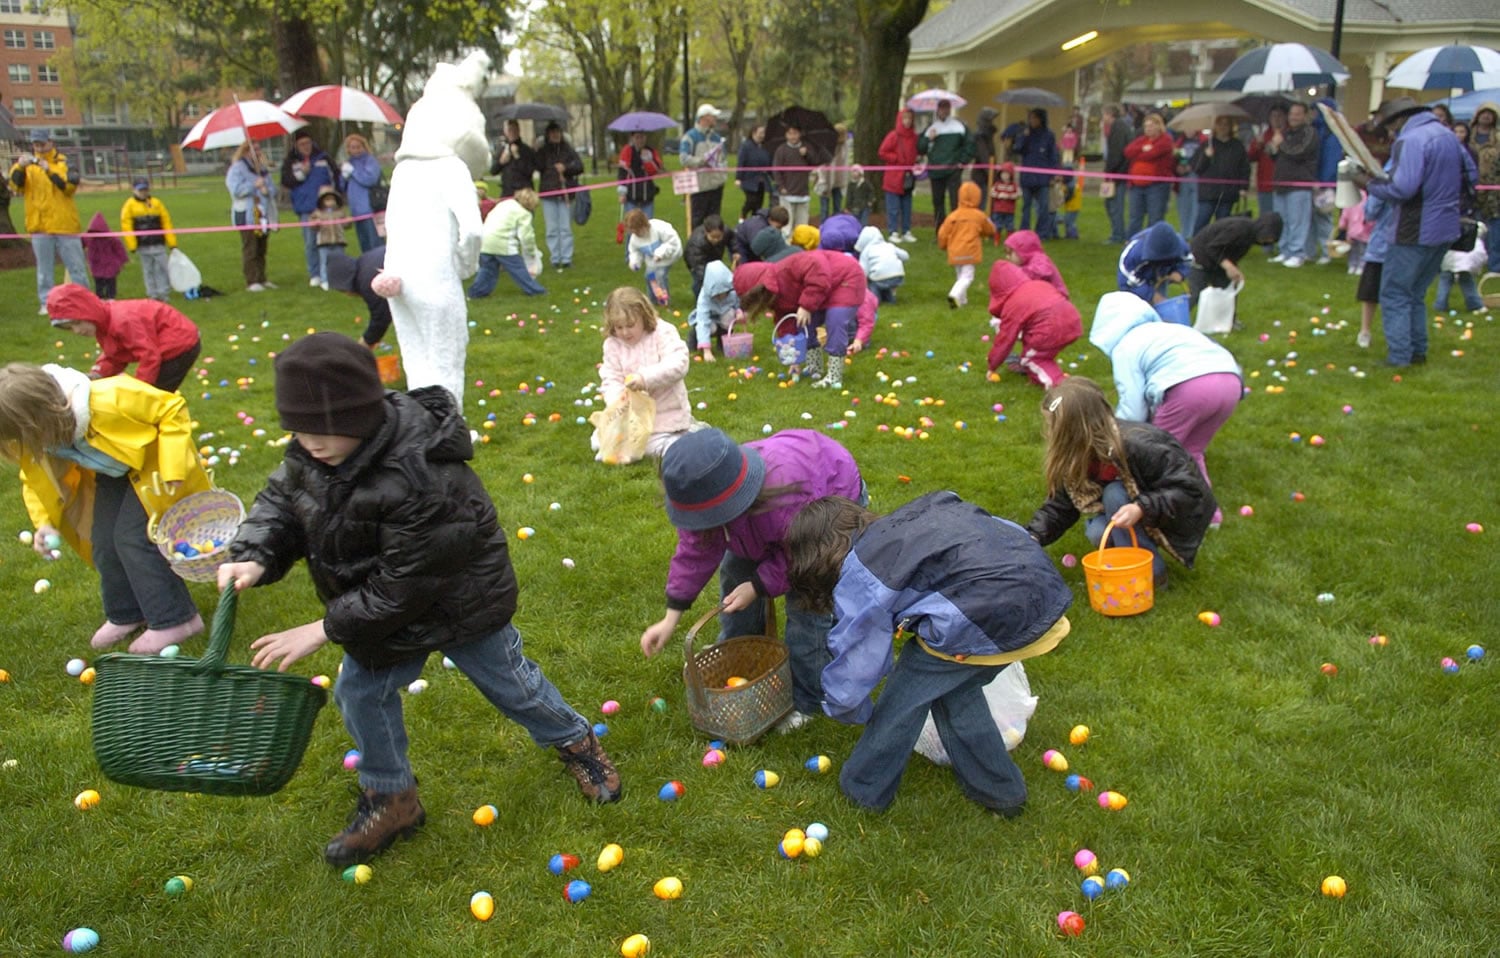 Children pick up plastic eggs at the annual Easter egg hunt at Esther Short Park.